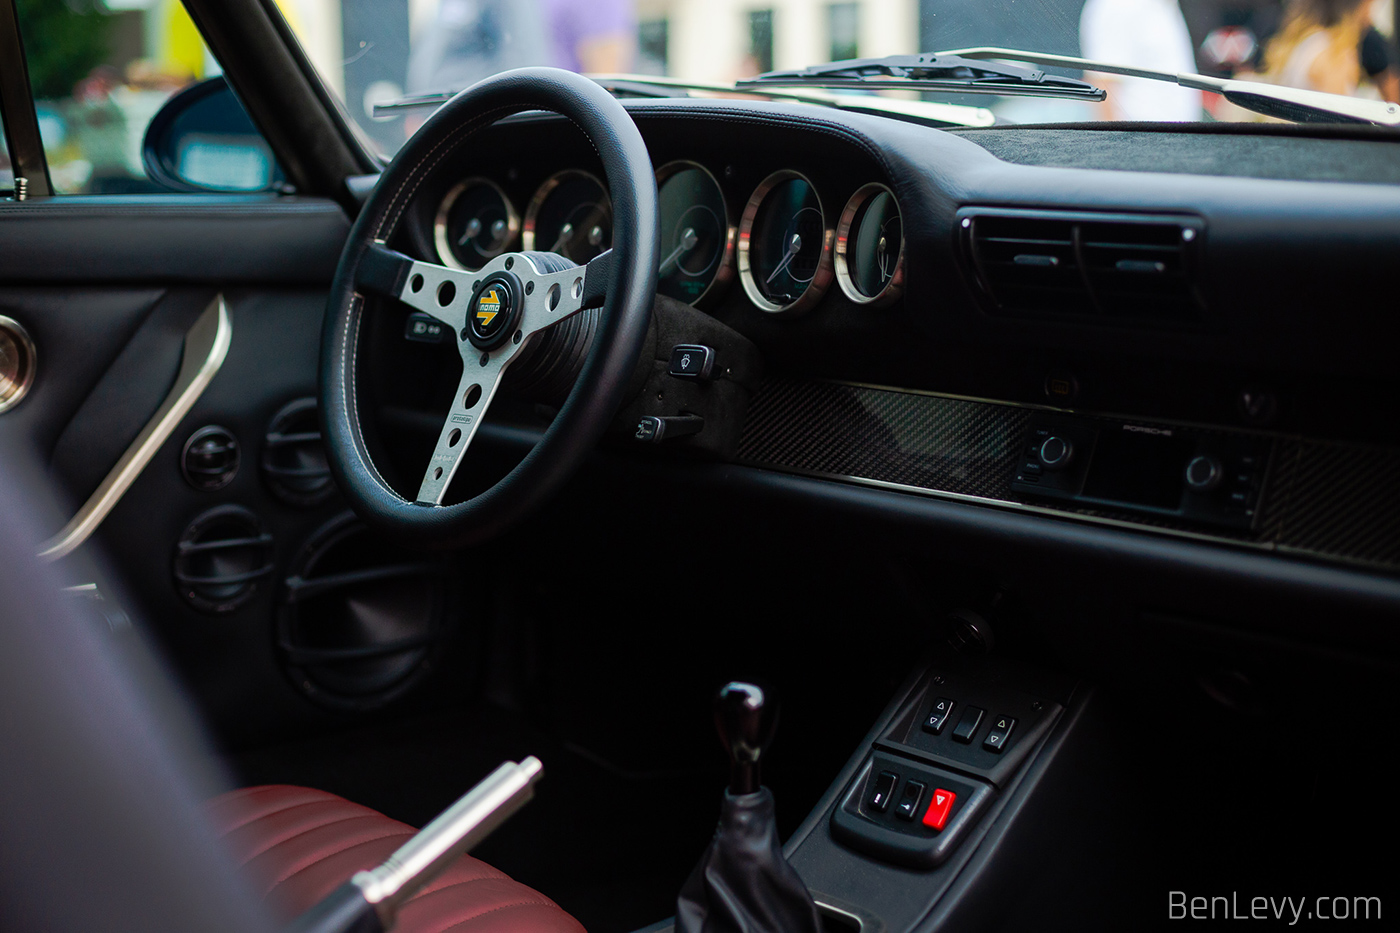 Carbon Fiber and Leather interior in Backdate Porsche 911 by Olsen Motorsports